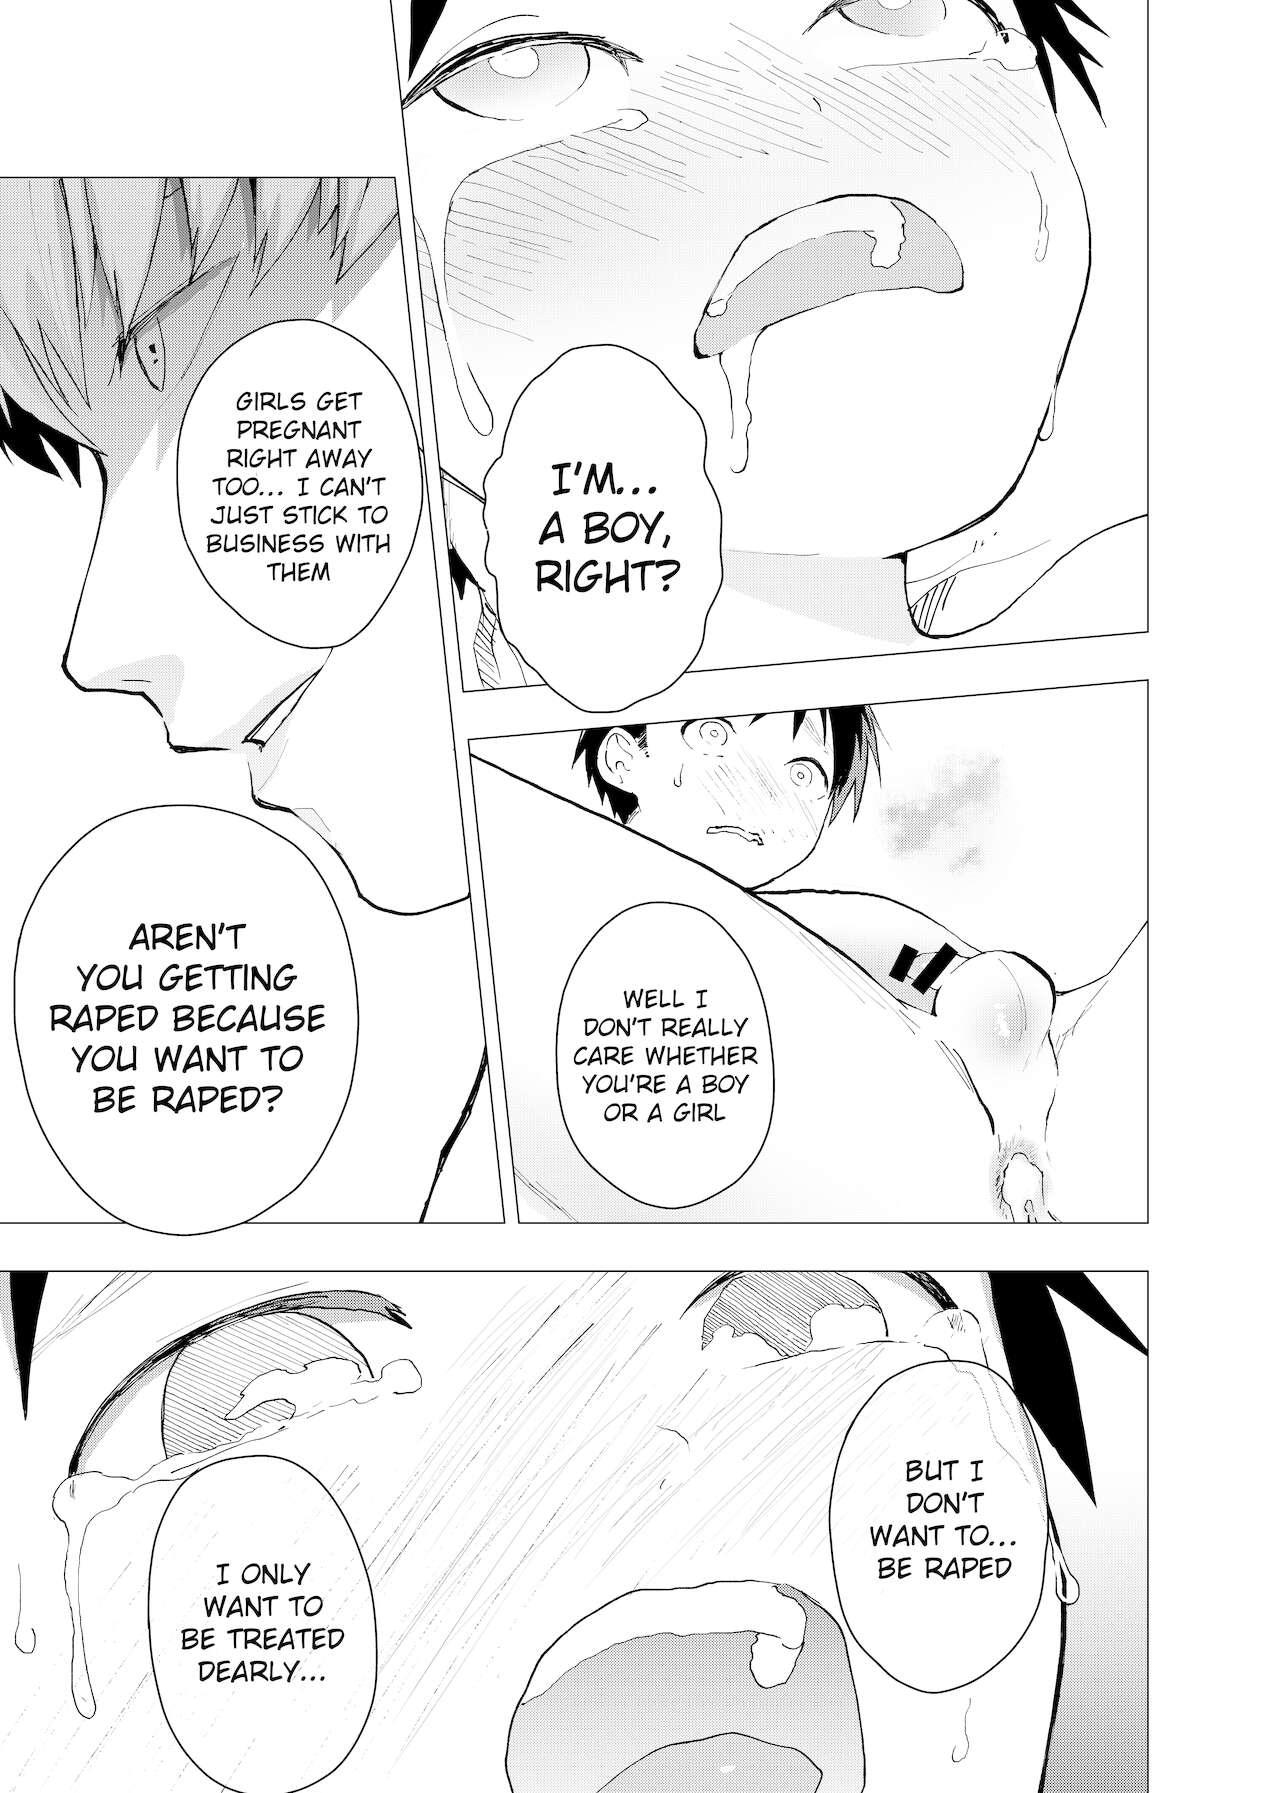 Bisexual Ibasho ga Nai node Kamimachi shite mita Suterareta Shounen no Ero Manga Ch. 6 | A Dirty Manga About a Boy Who Got Abandoned and Is Waiting for Someone To Save Him Ch. 6 - Original Old - Page 9